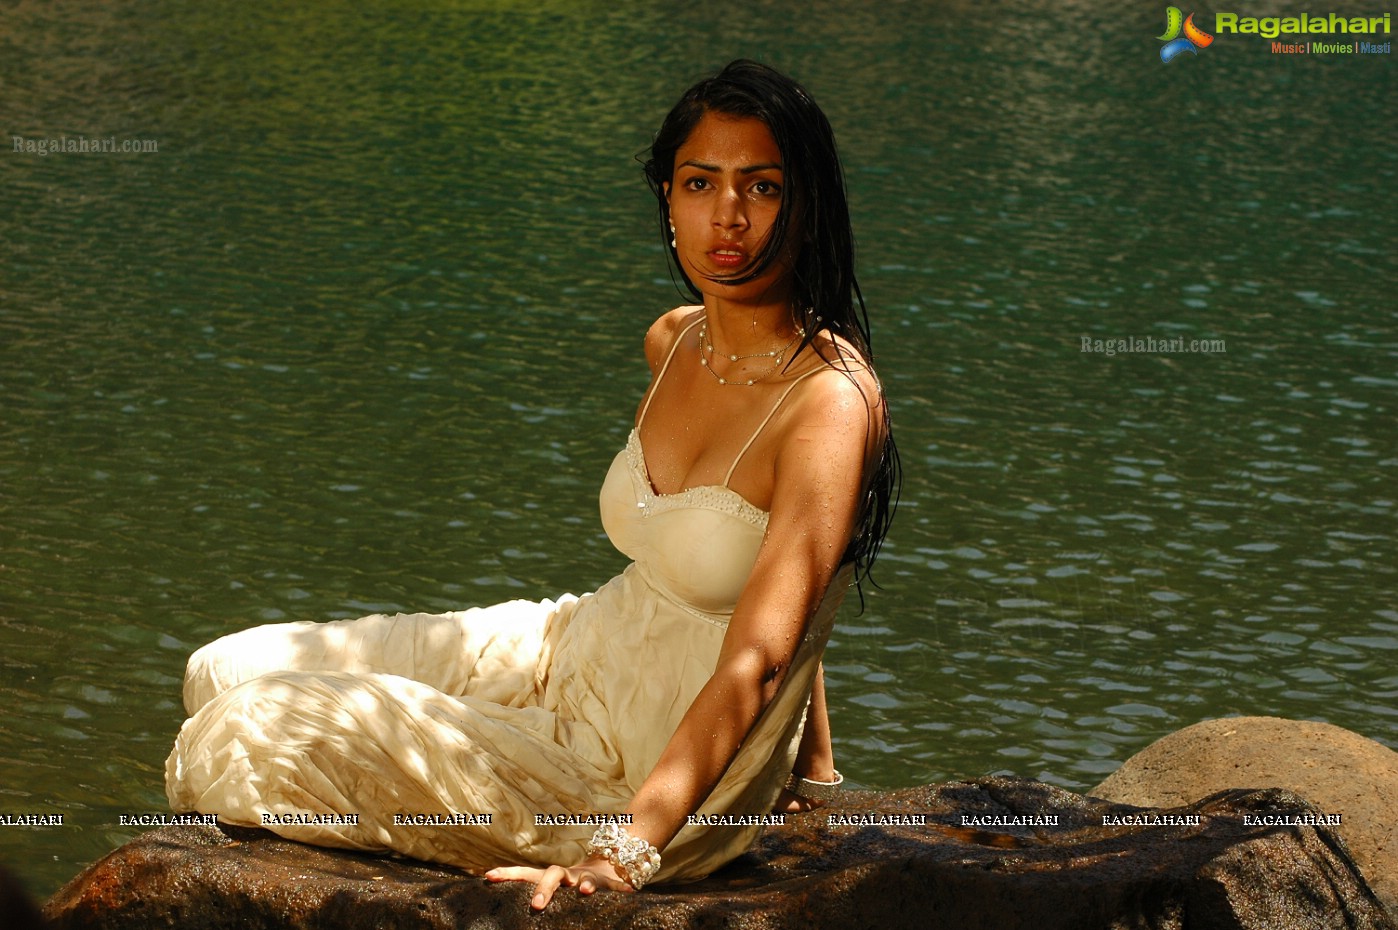 Rhea Chakravarthi in Nightgown, Photo Gallery, Images